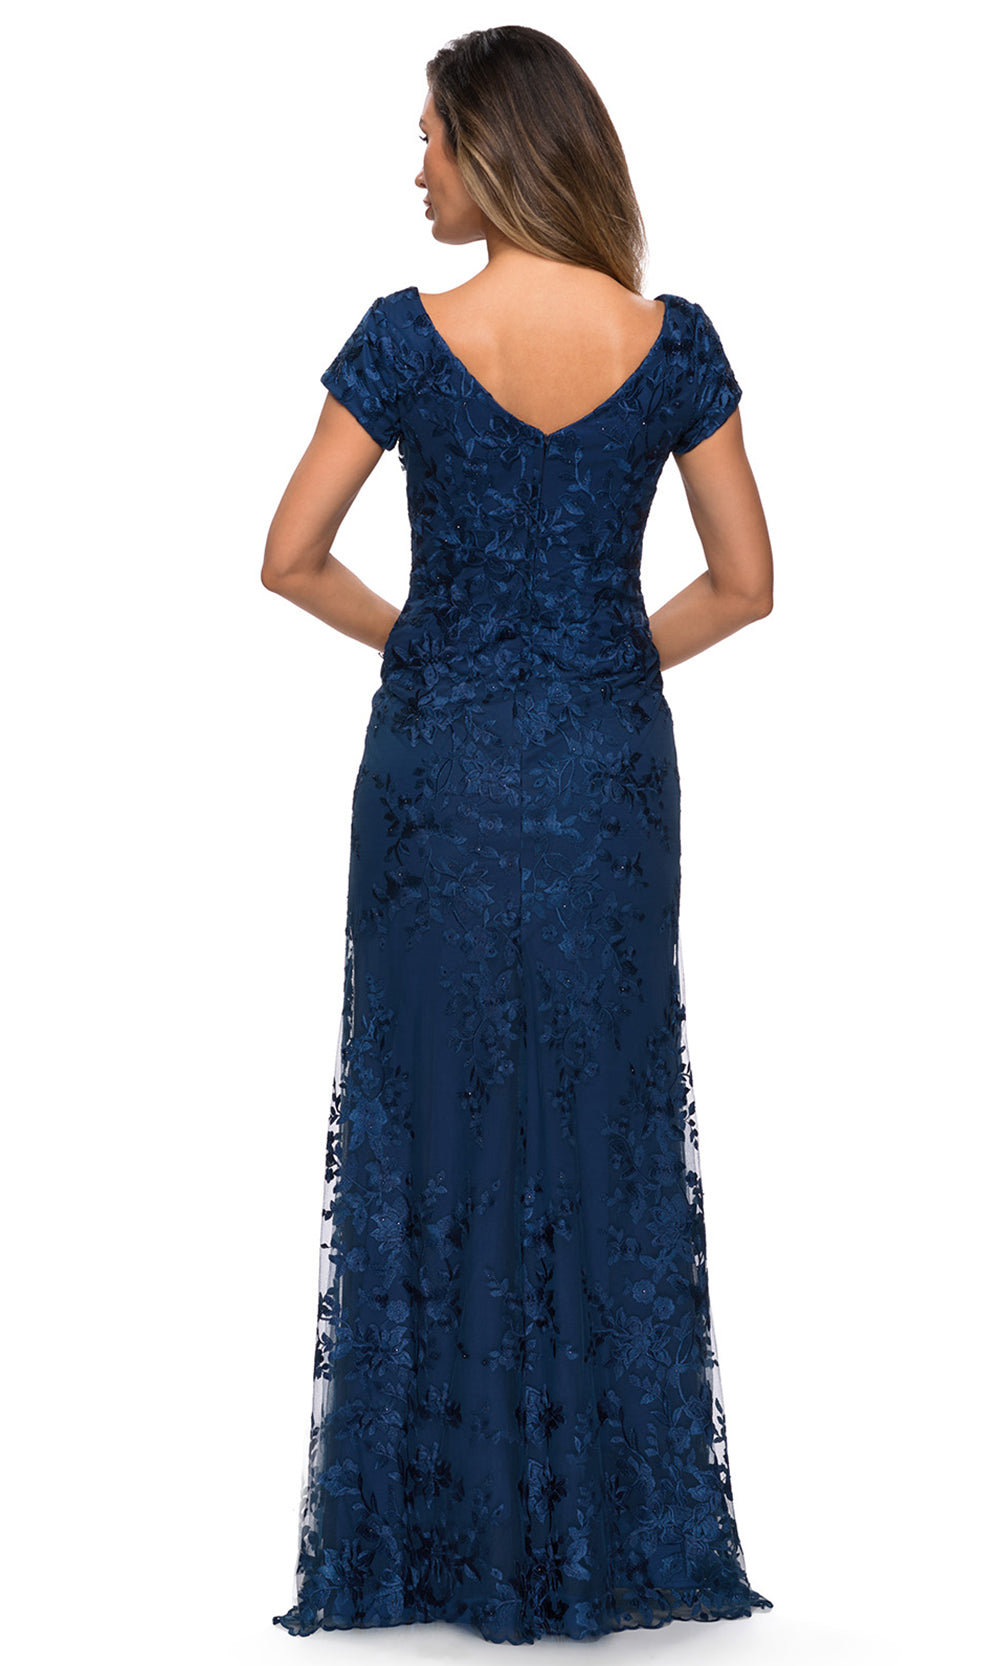 La Femme - 27842 Scoop Neck Lace Fitted Dress In Blue